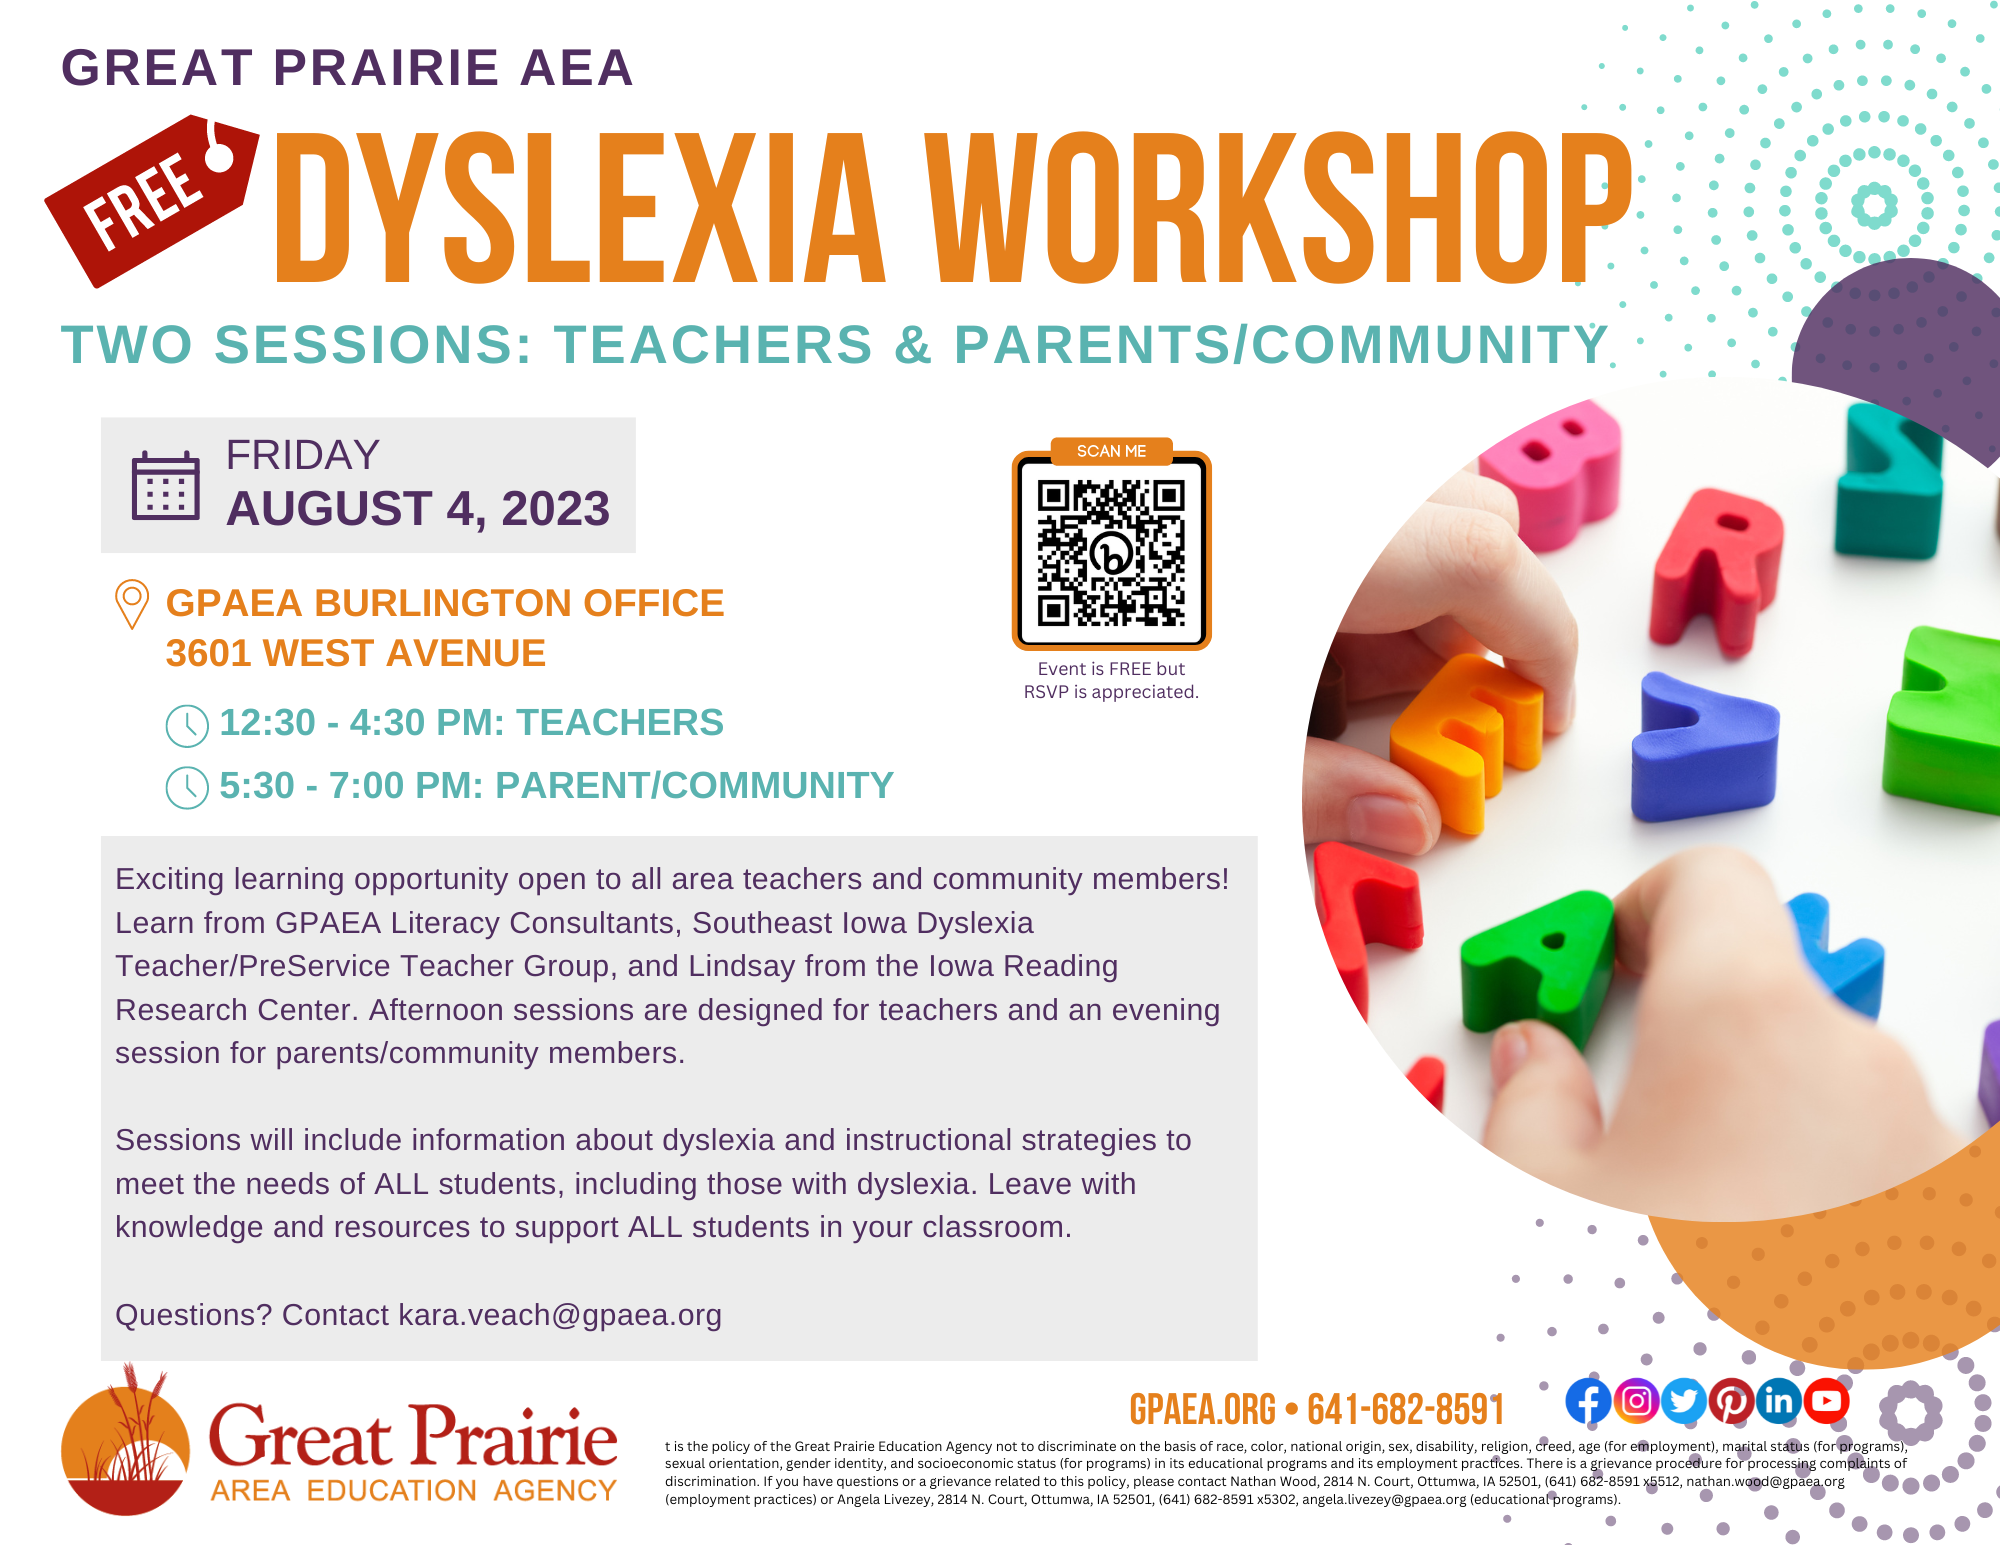 GPAEA Dyslexia Workshop 8423